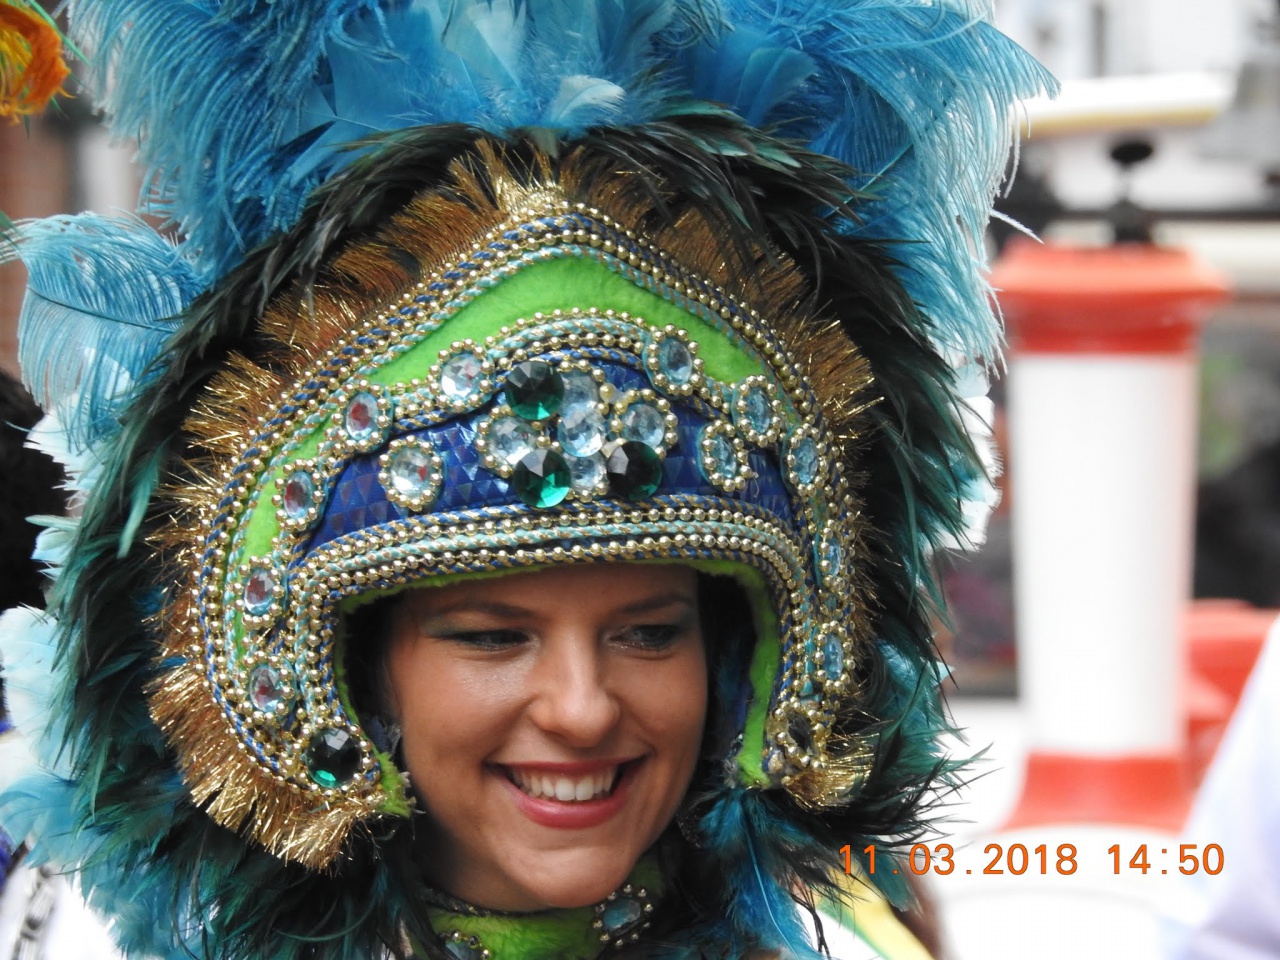 Carnaval de Wavre wawa magazine brabant wallon 2018 00001